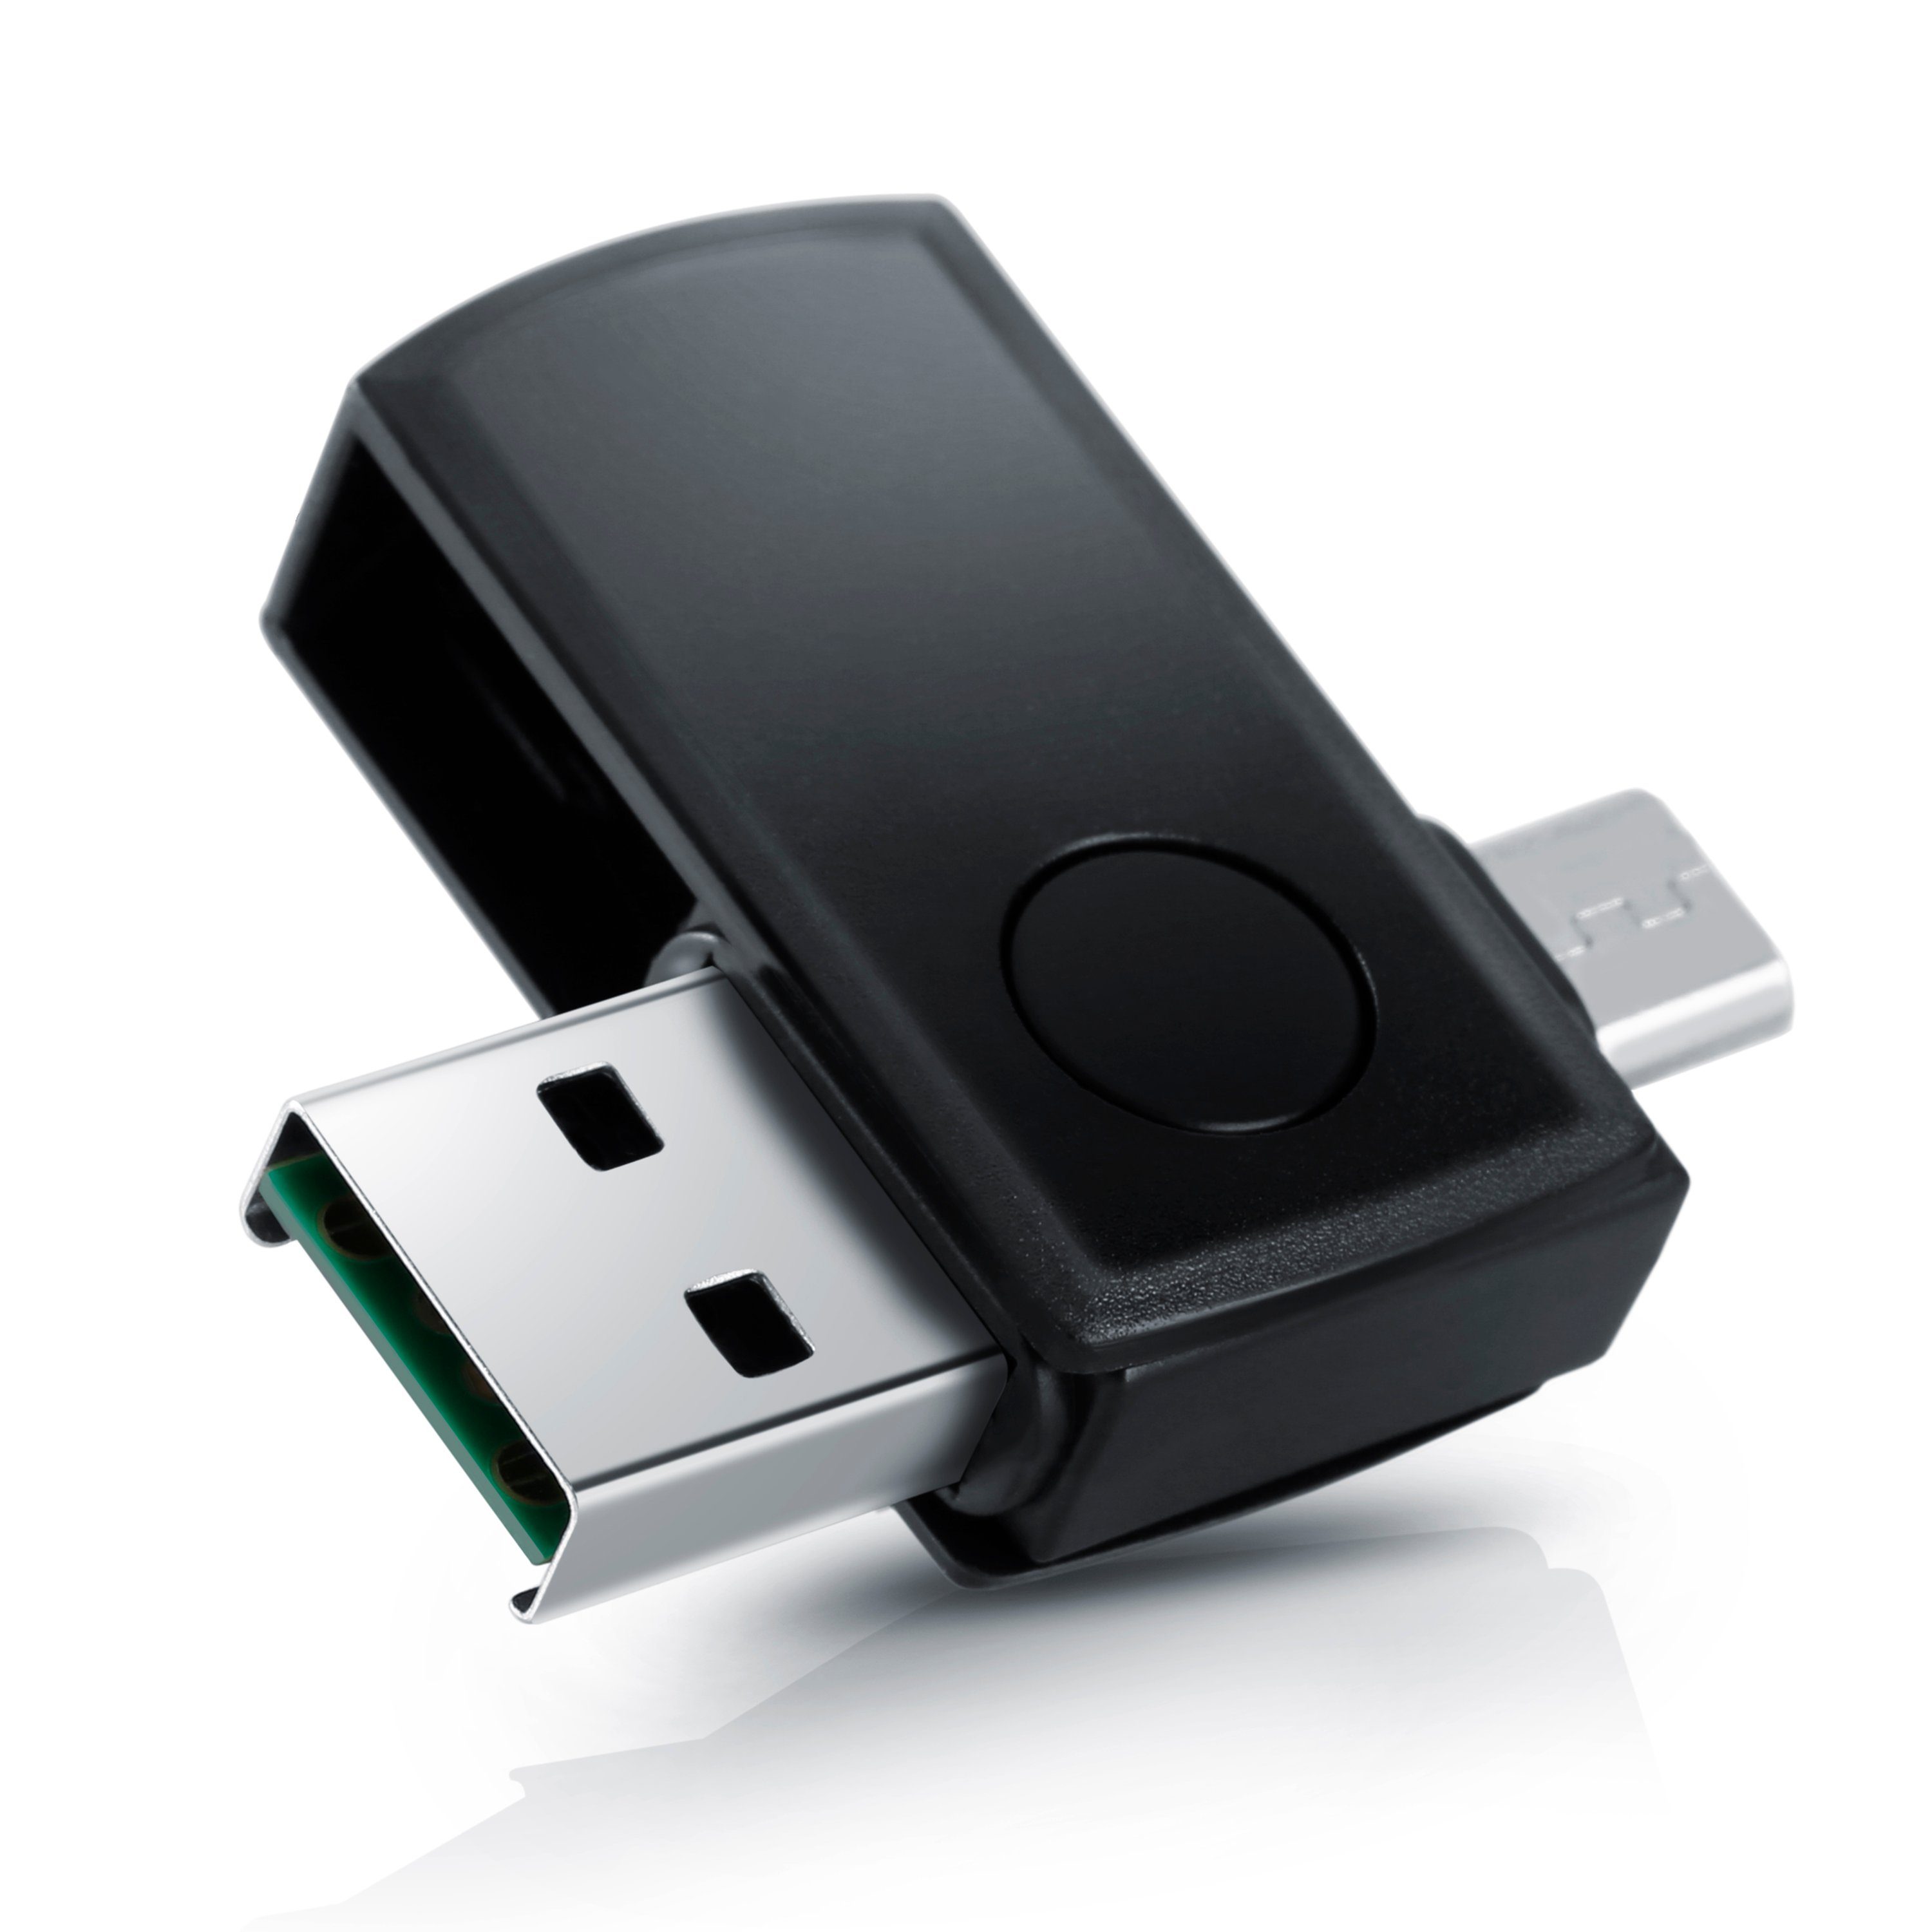 CSL USB-Adapter USB zu Micro USB Stecker; USB A Stecker, microUSB (OTG) - USB  Adapter für Smartphone & PC für microSD / microSDHC / microSDXC Karten  online kaufen | OTTO